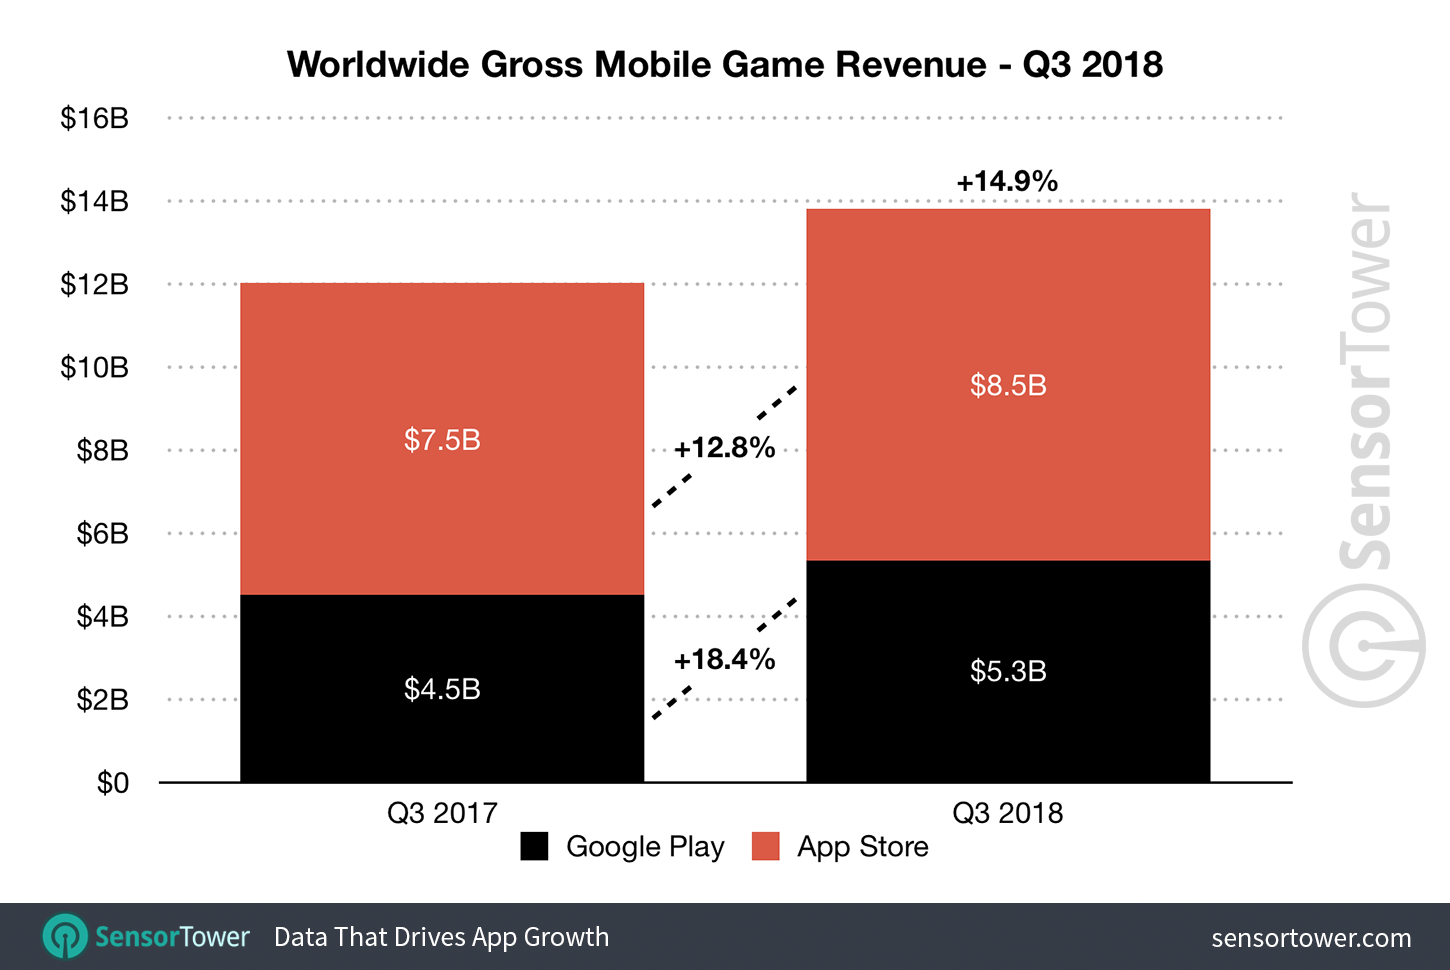 q3-2018-game-revenue-worldwide (1)